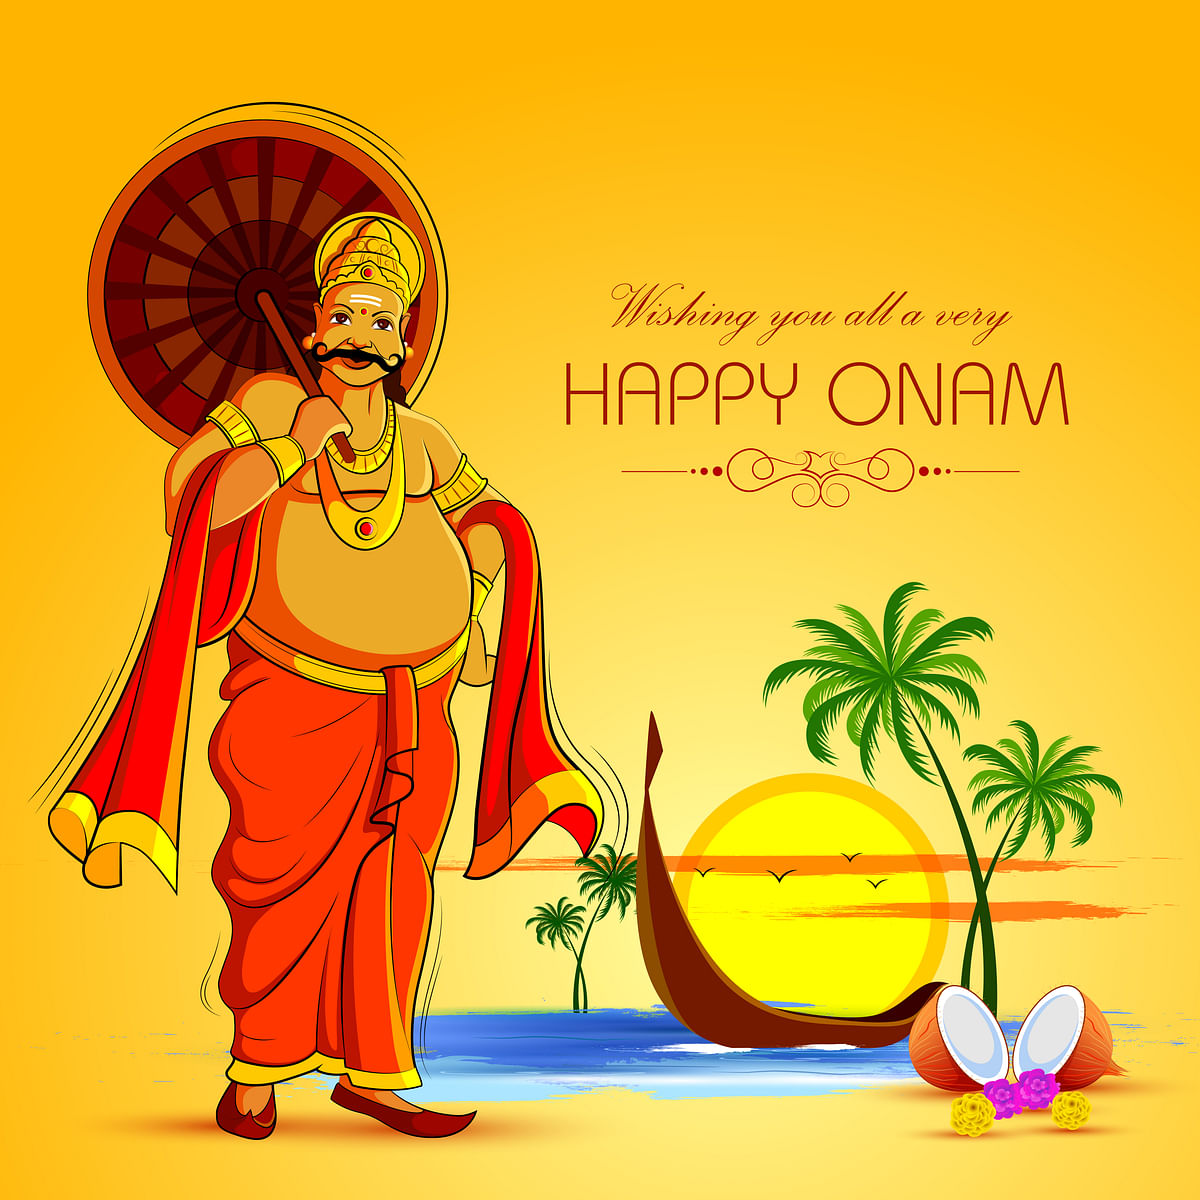 Onam 2019 Wishes in English,Malayalam,Tamil- Happy Onam ...